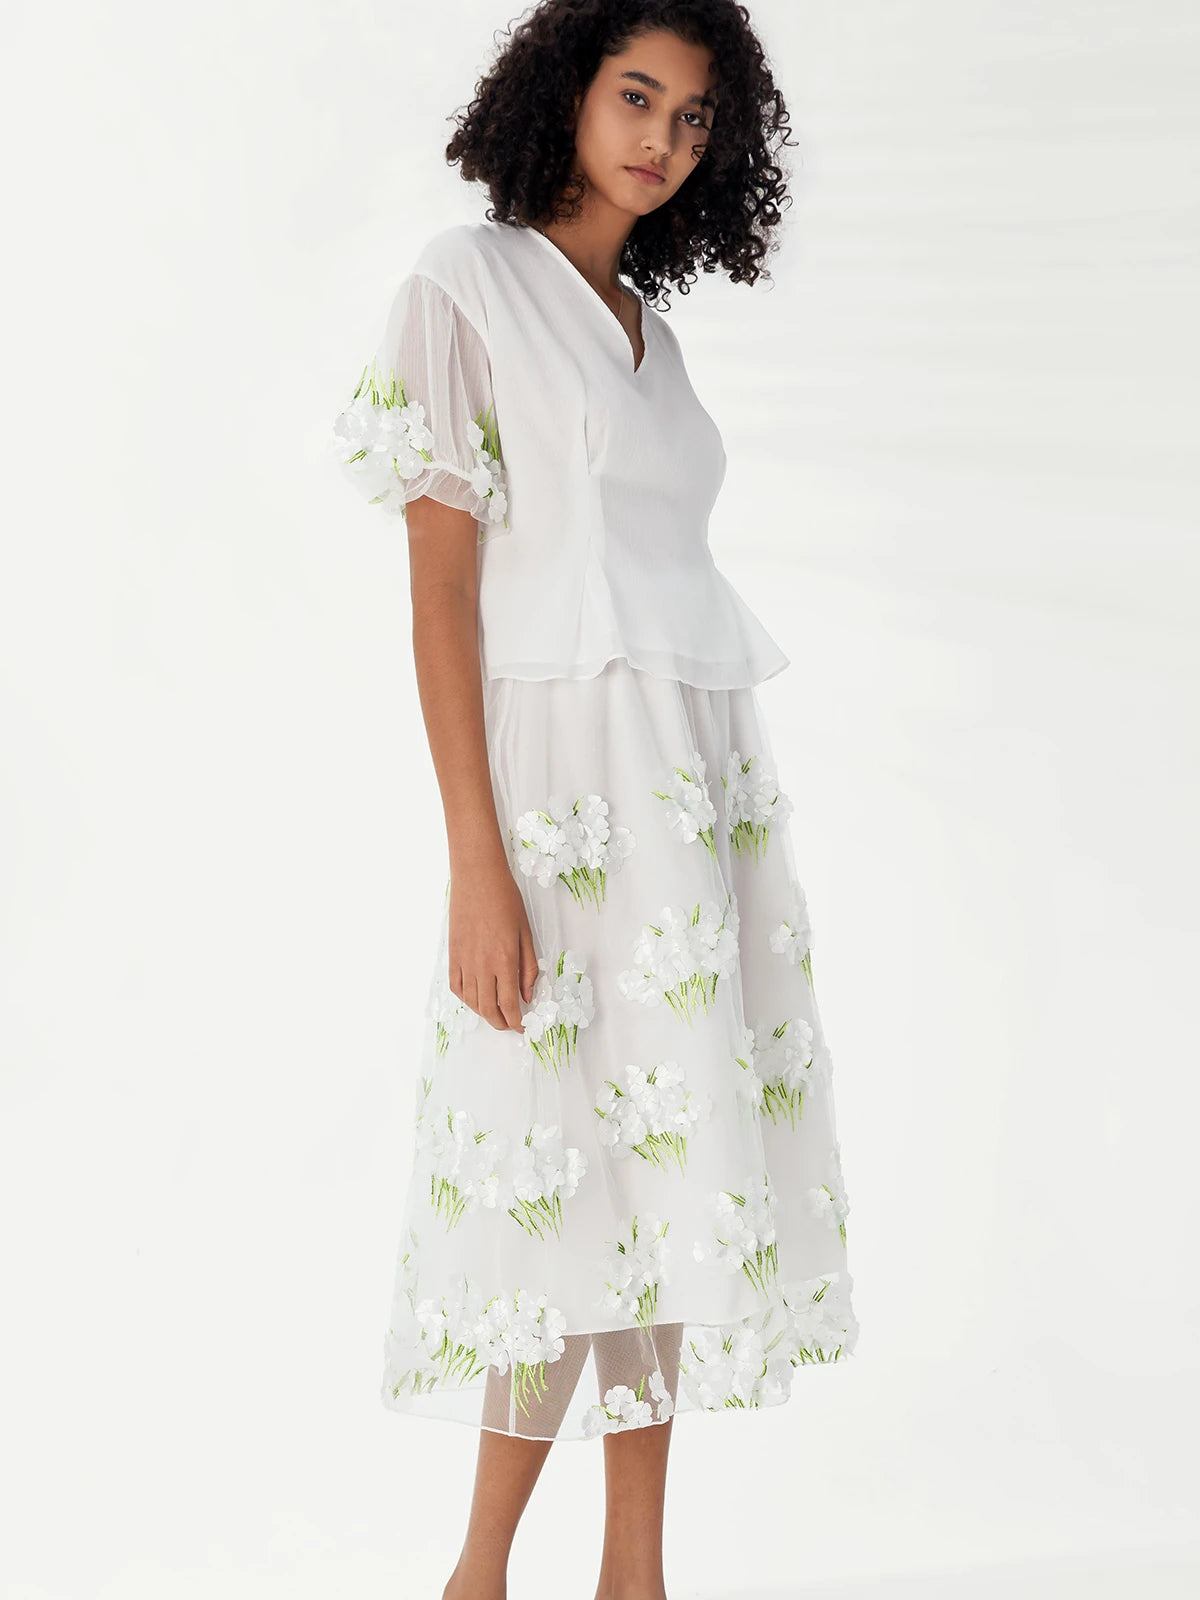 Fashion V-neck mesh embroidery floral short-sleeved skirt suit